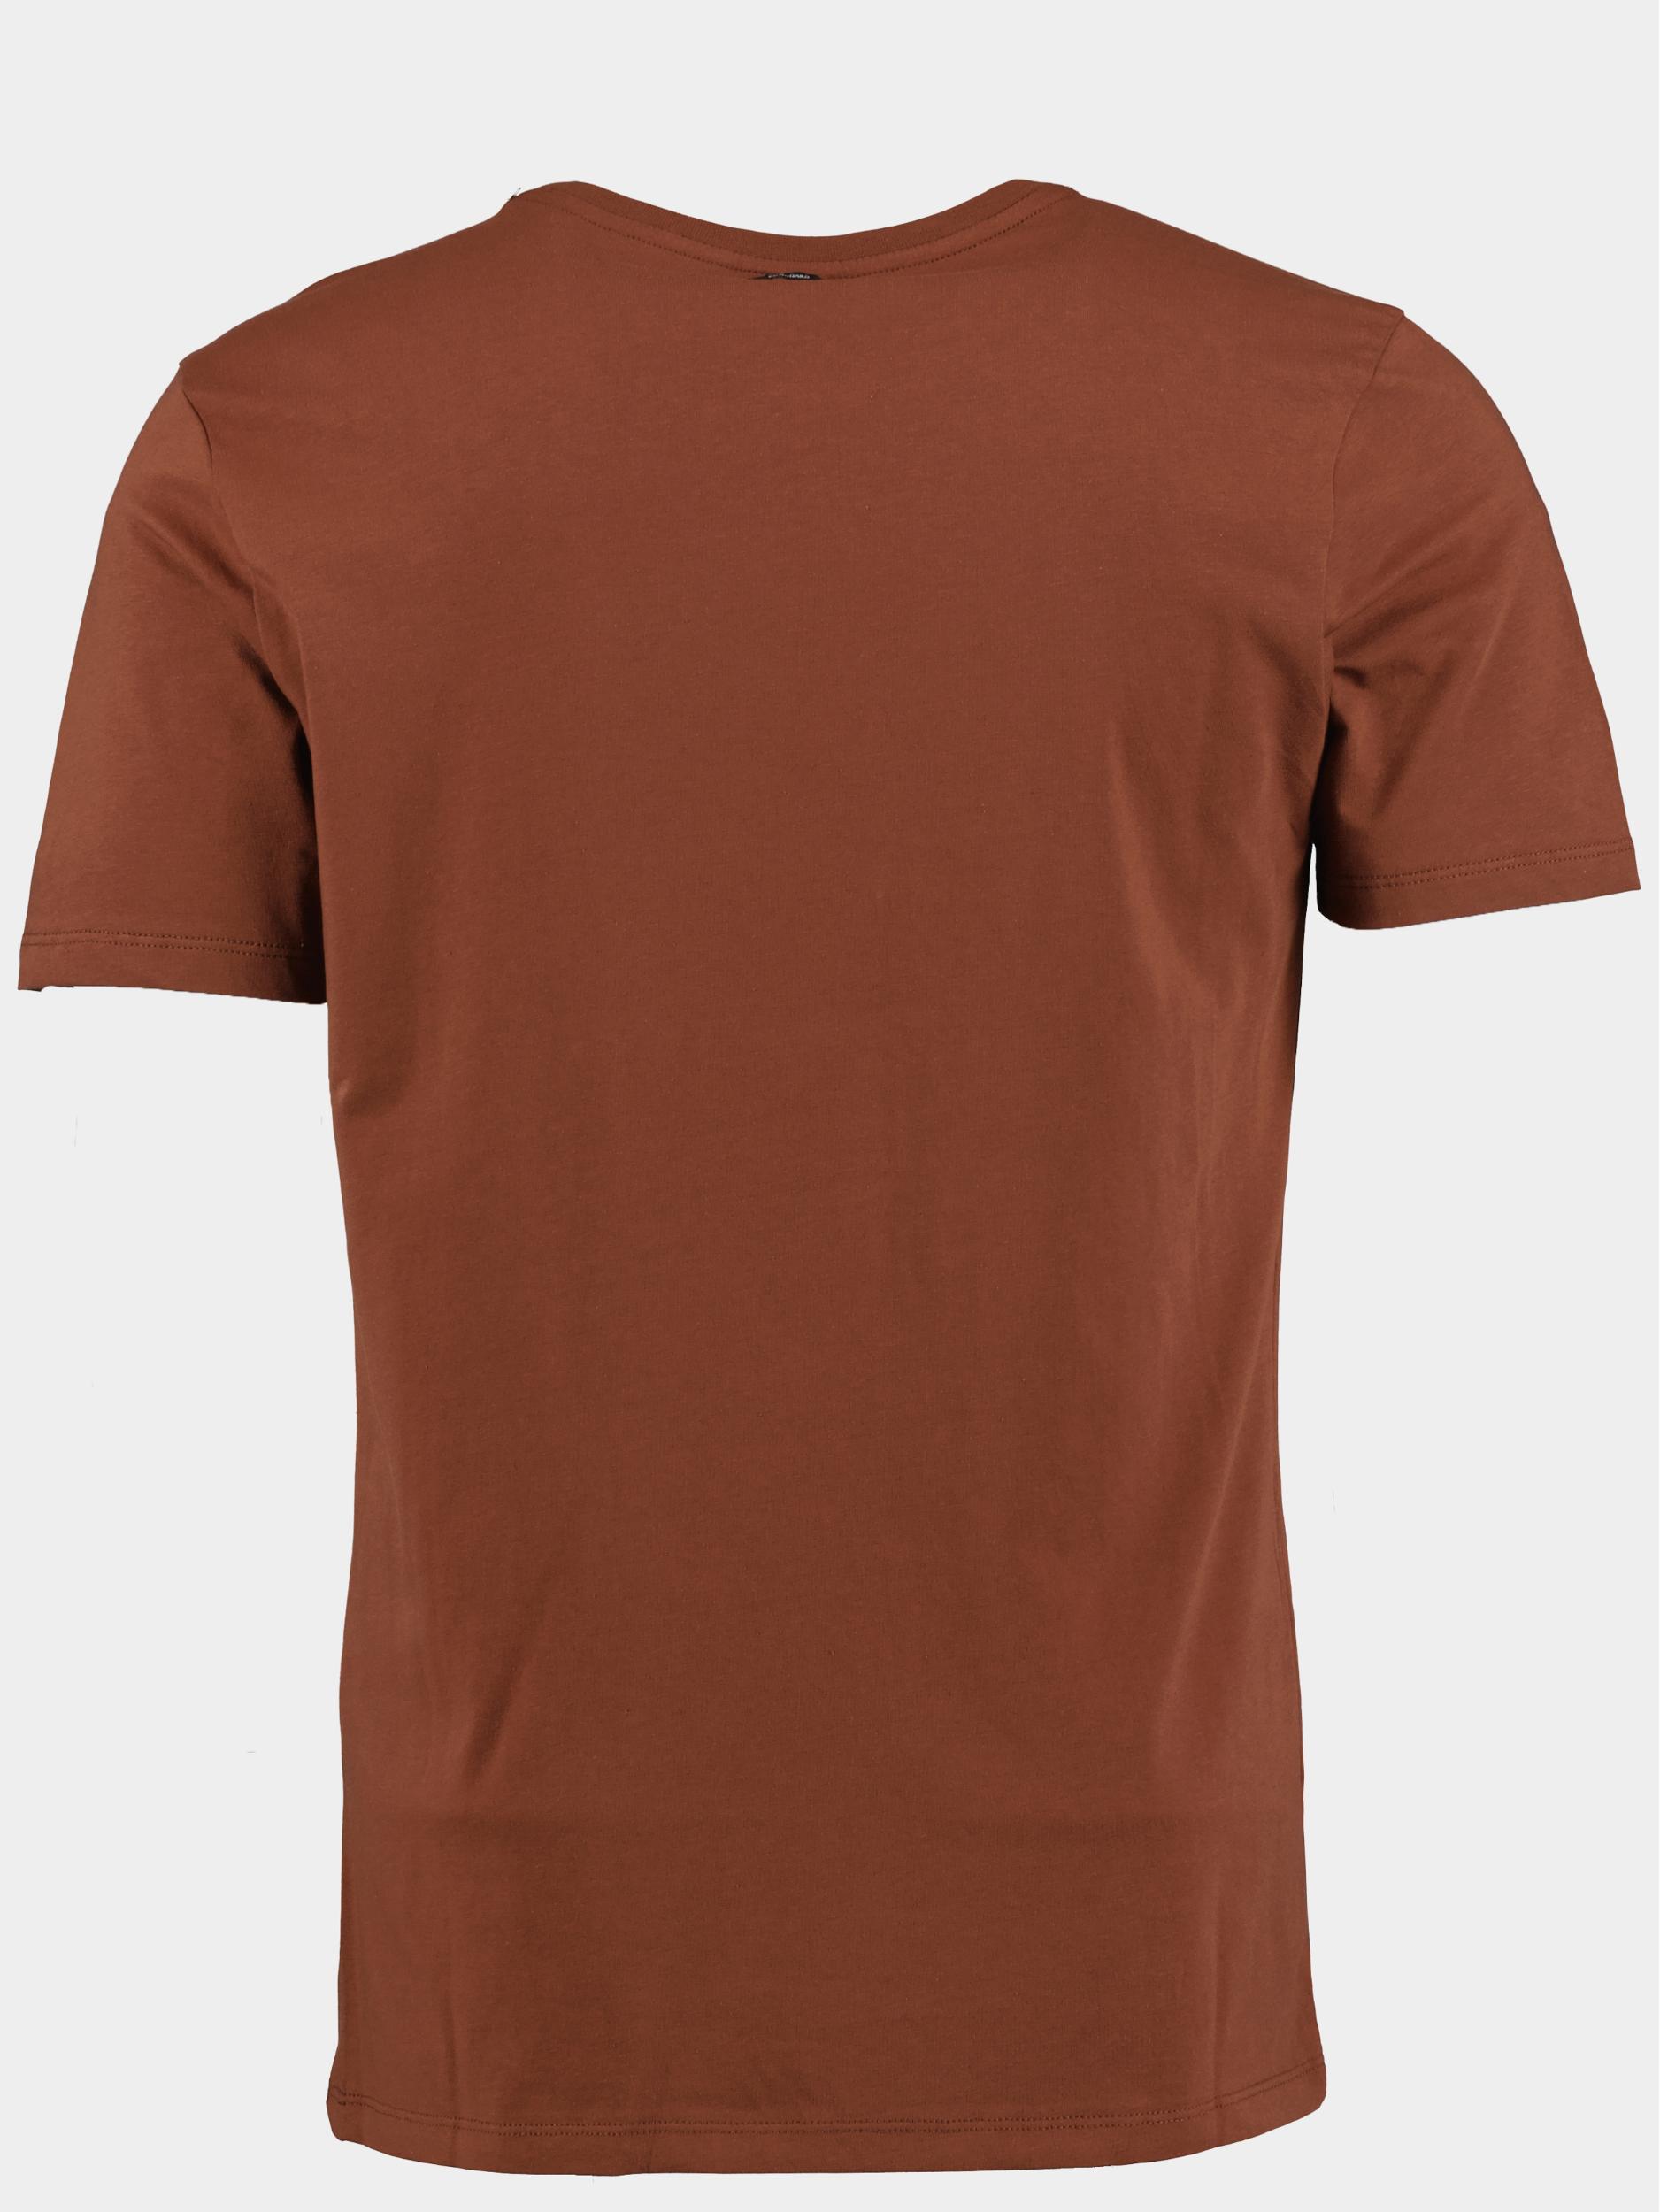 Vanguard T-shirt korte mouw Bruin Short sleeve r-neck cotton el VTSS2309568/8250